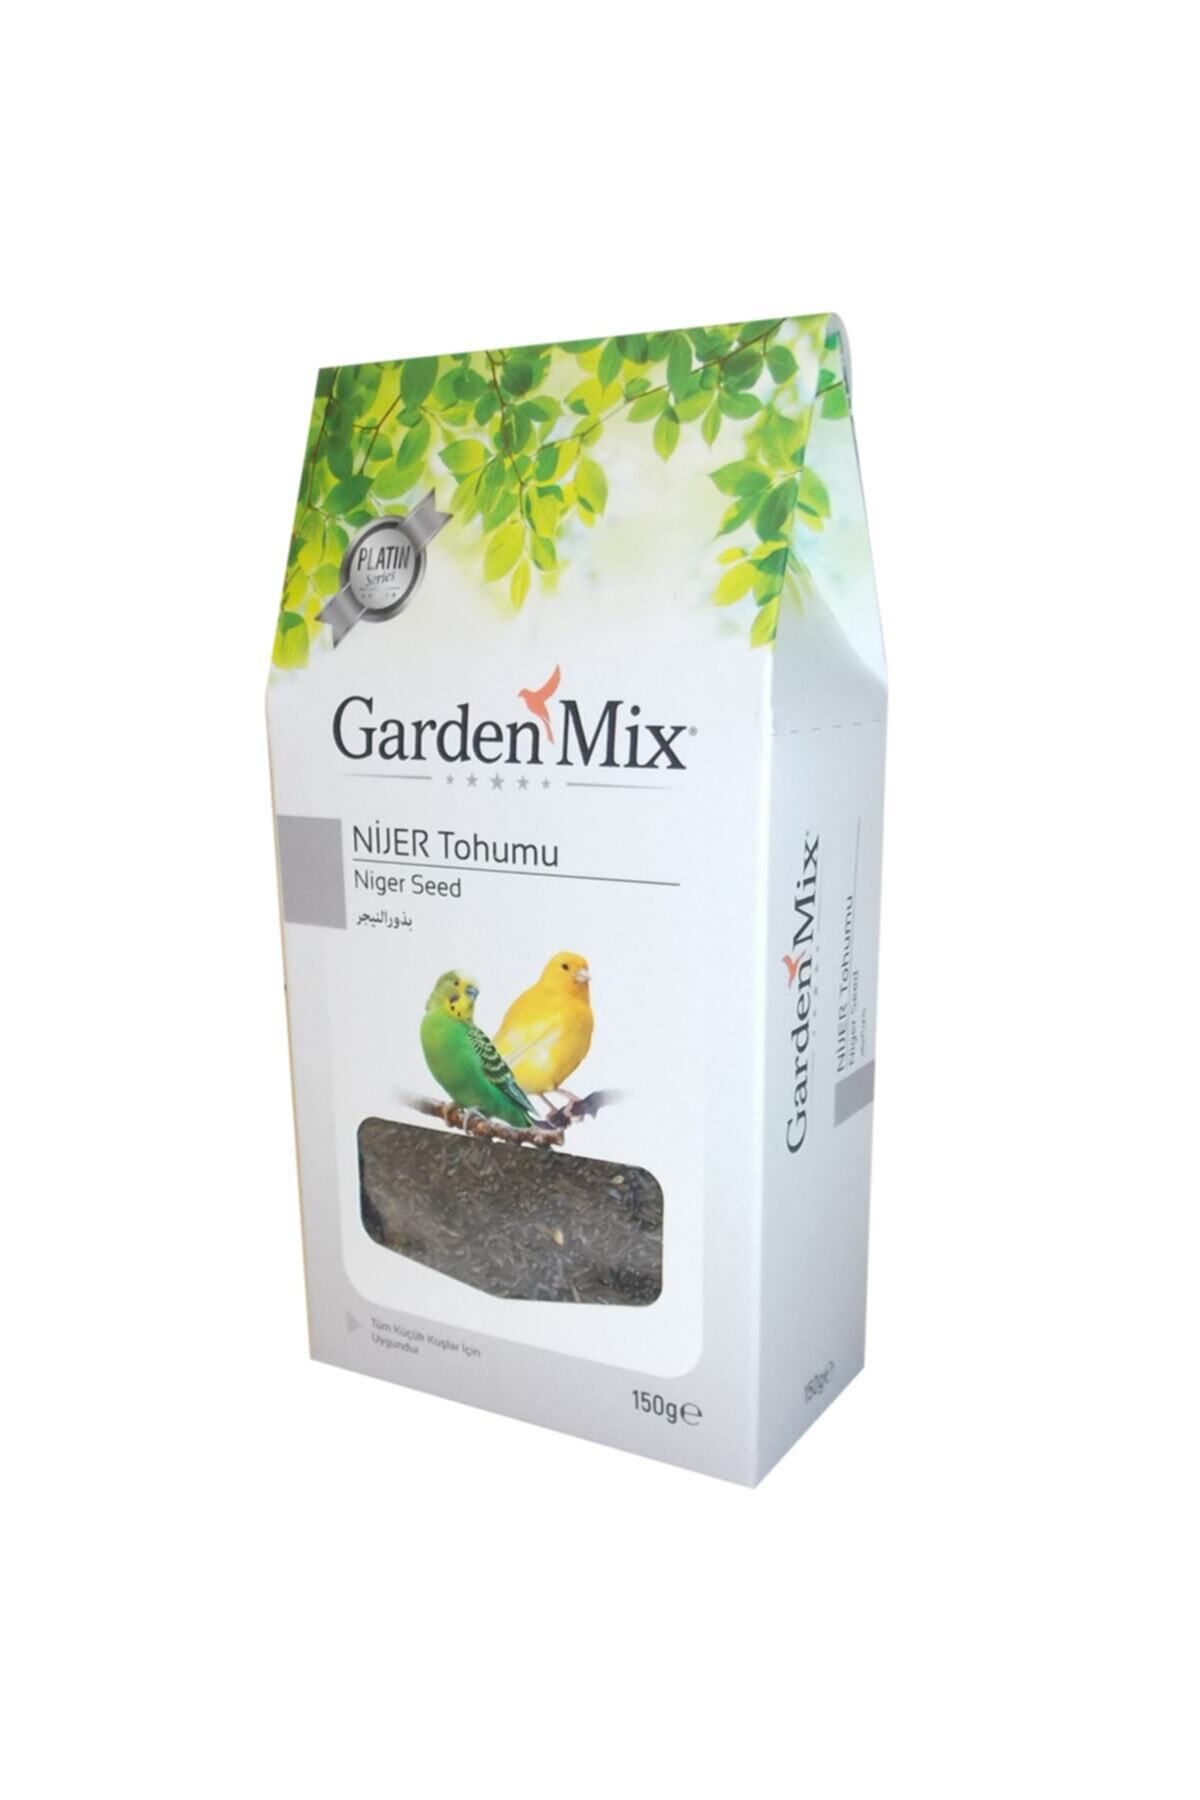 Gardenmix Garden Mix Platin Nijer Tohumu 150gr